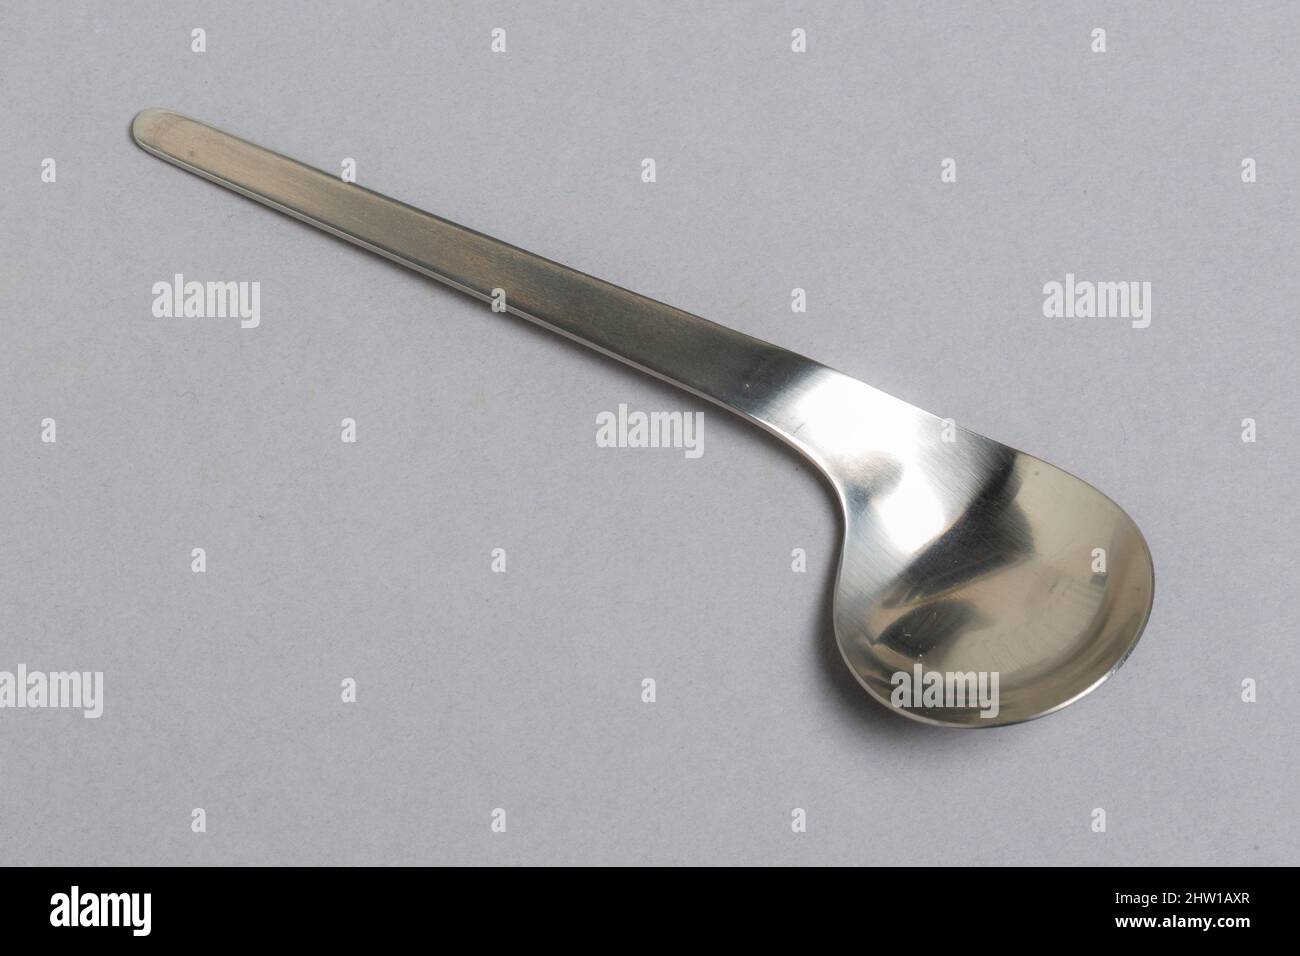 AJ cutlery by Arne Jacobsen, made by Anton Michelsen, Denmark.  Left-handed soup spoon. Stock Photo